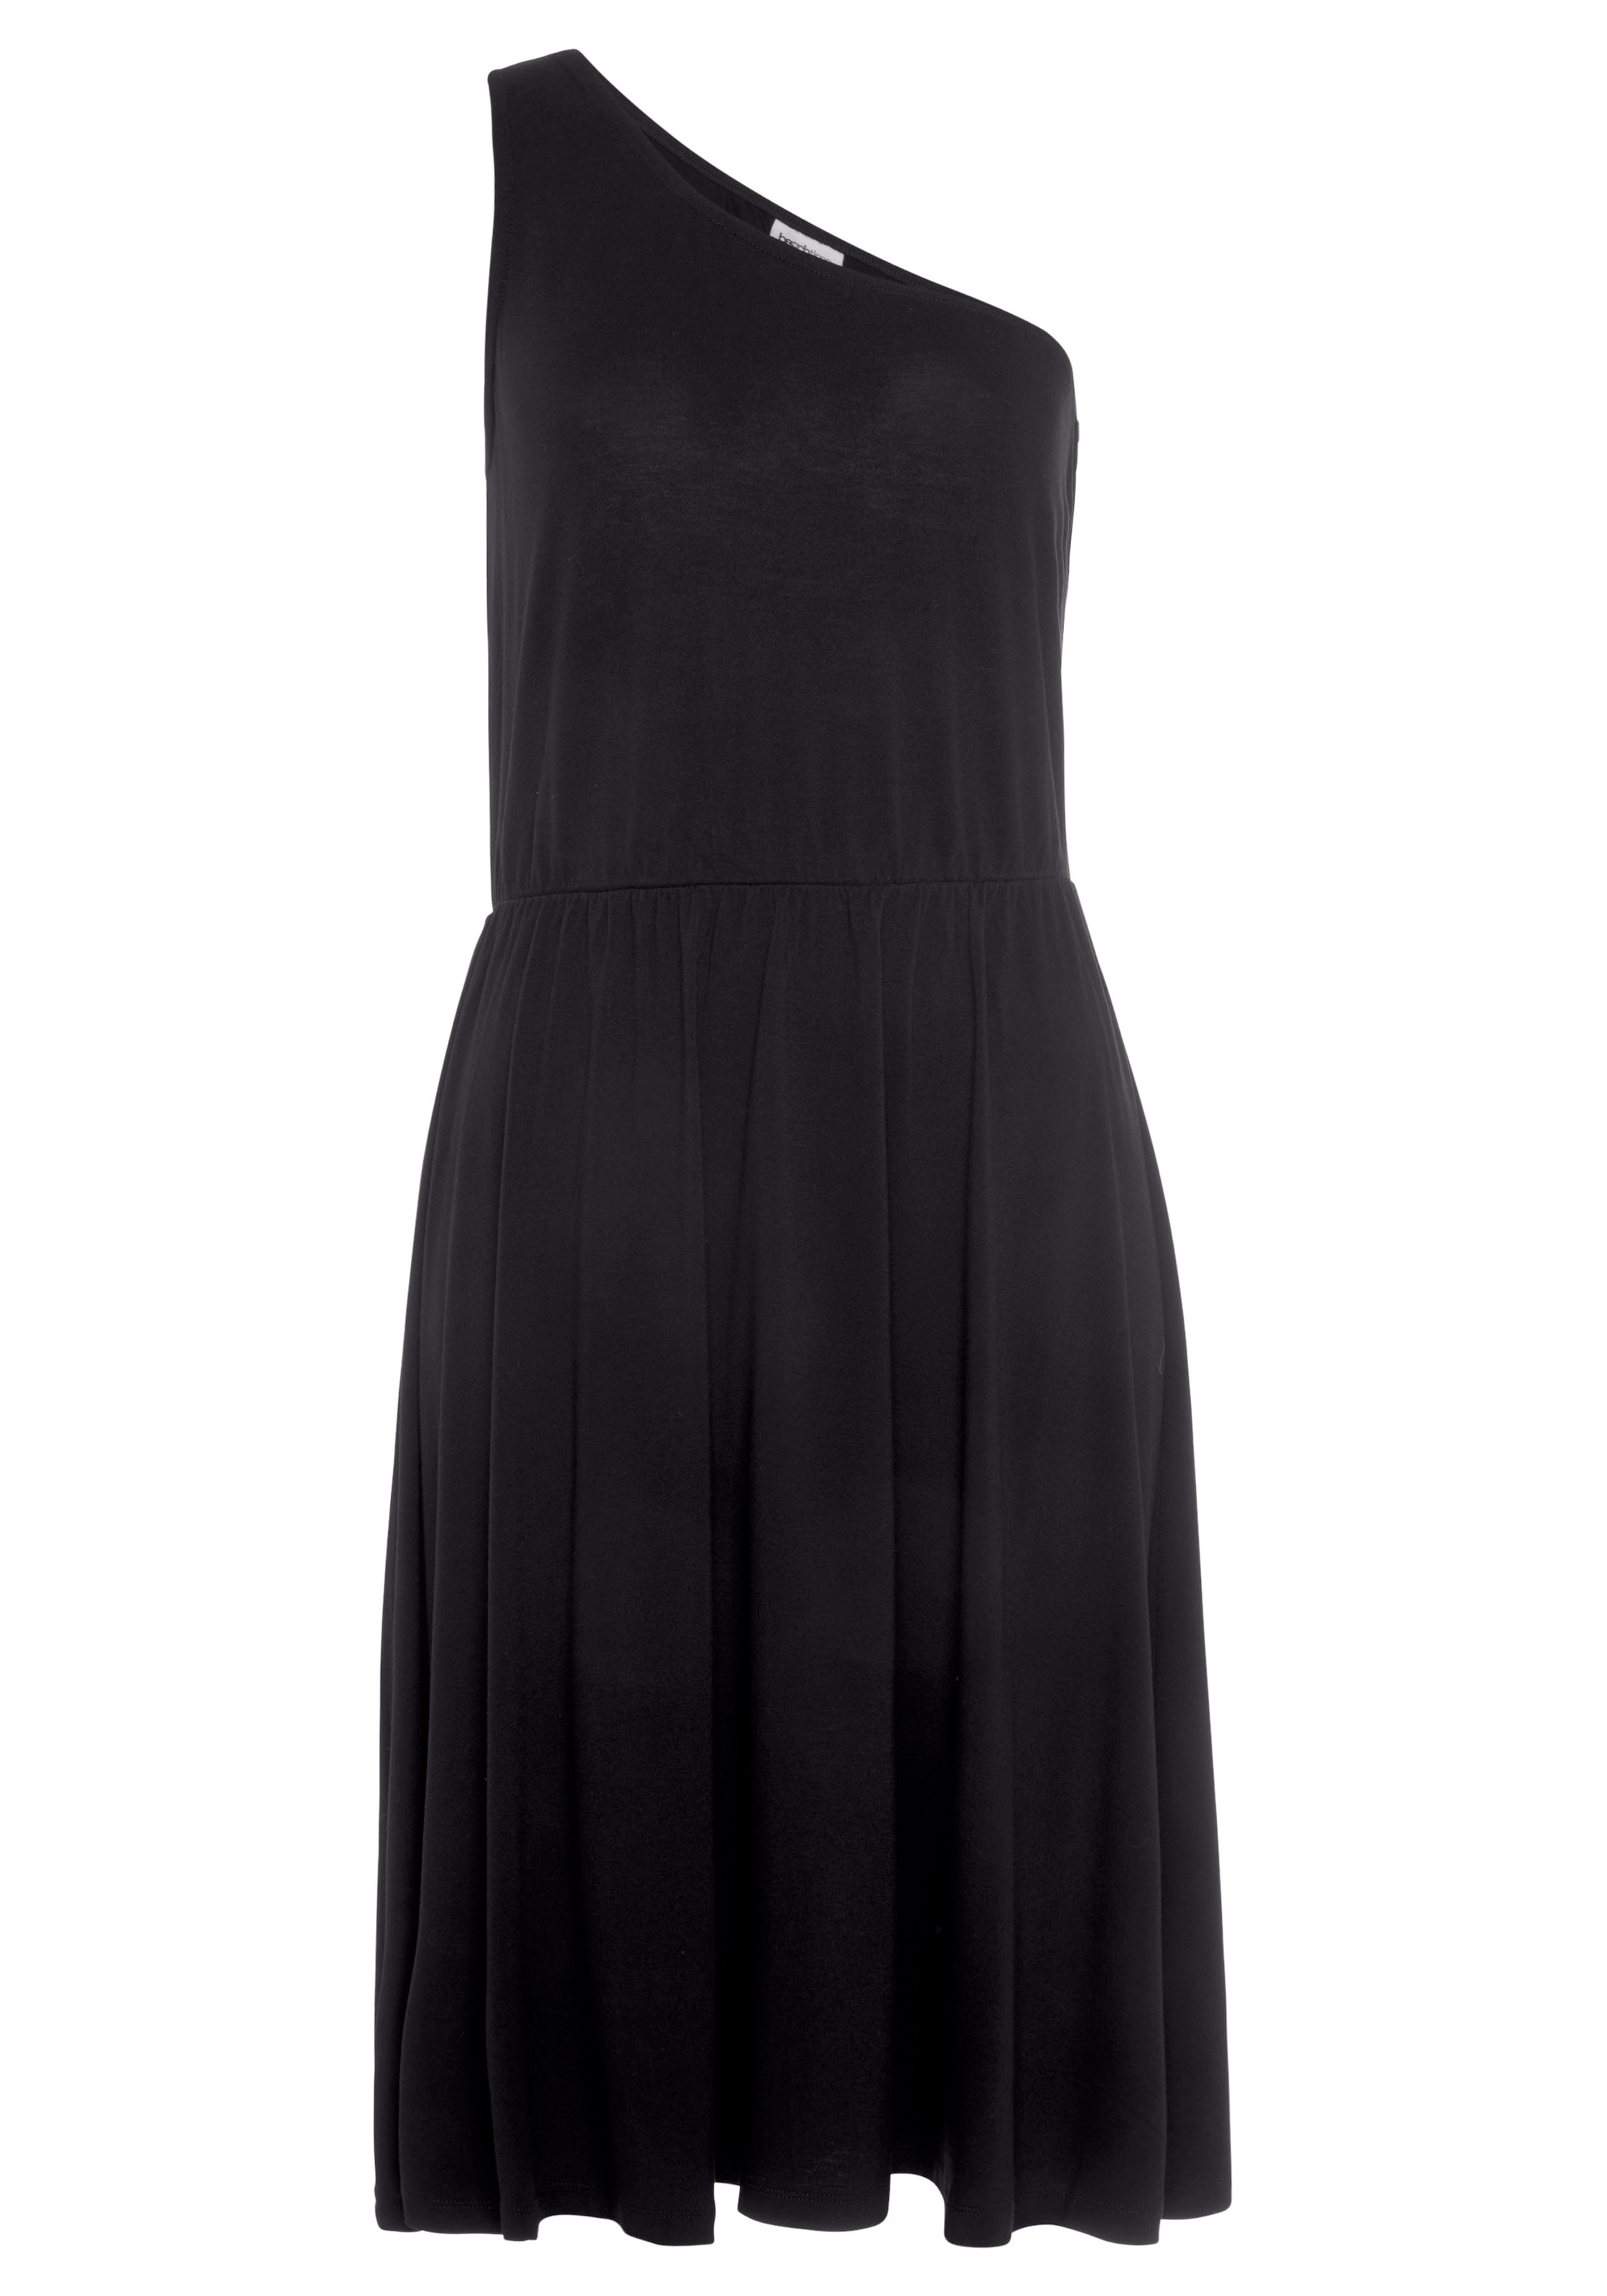 LASCANA Shop im OTTO Online One-Shoulder-Kleid